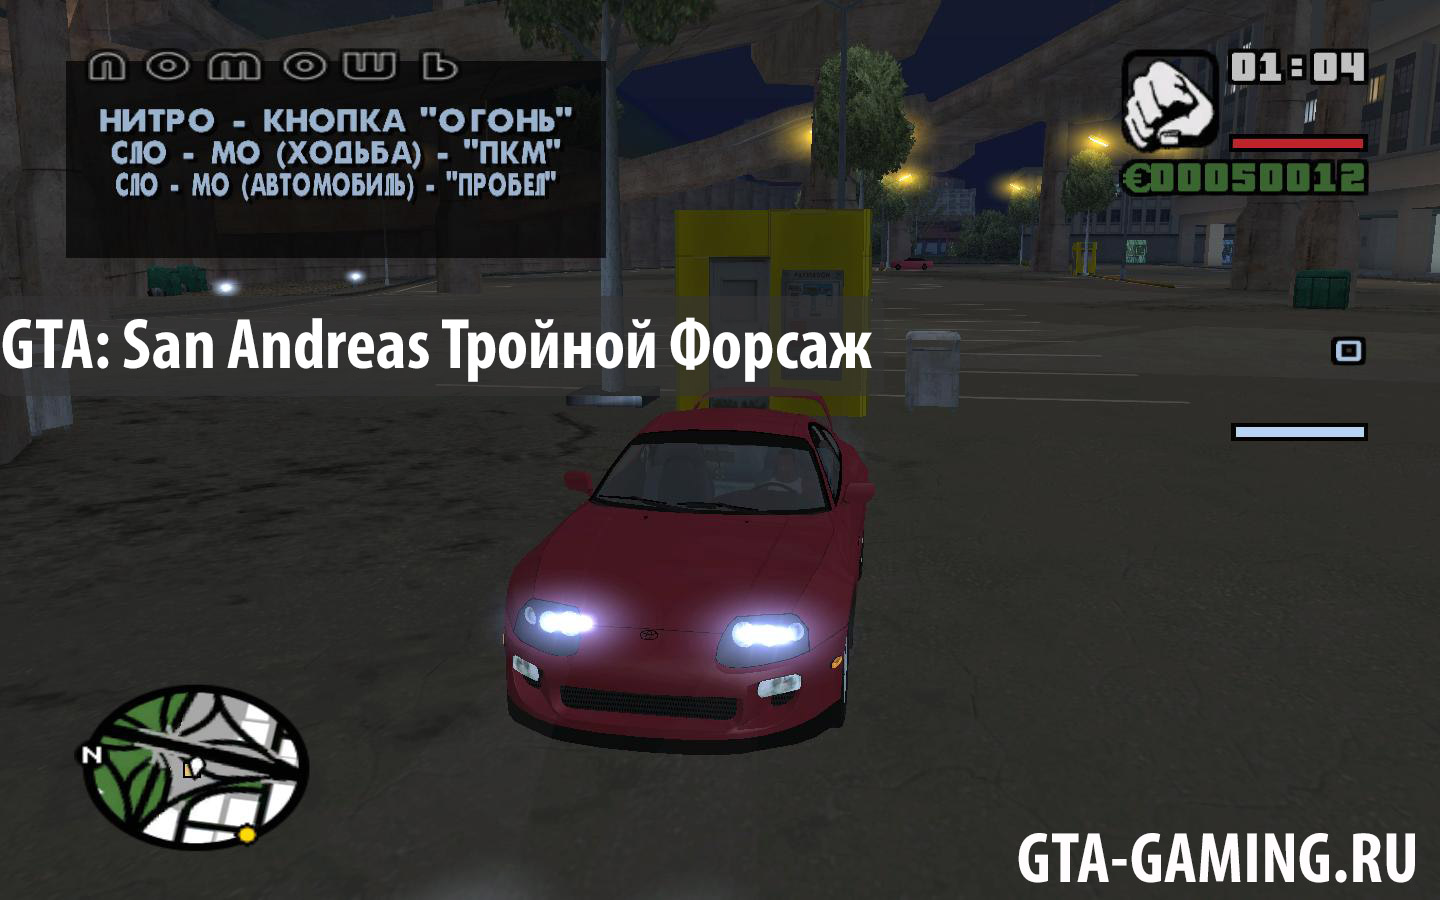 GTA:San Andreas - Тройной Форсаж - Токийский дрифт